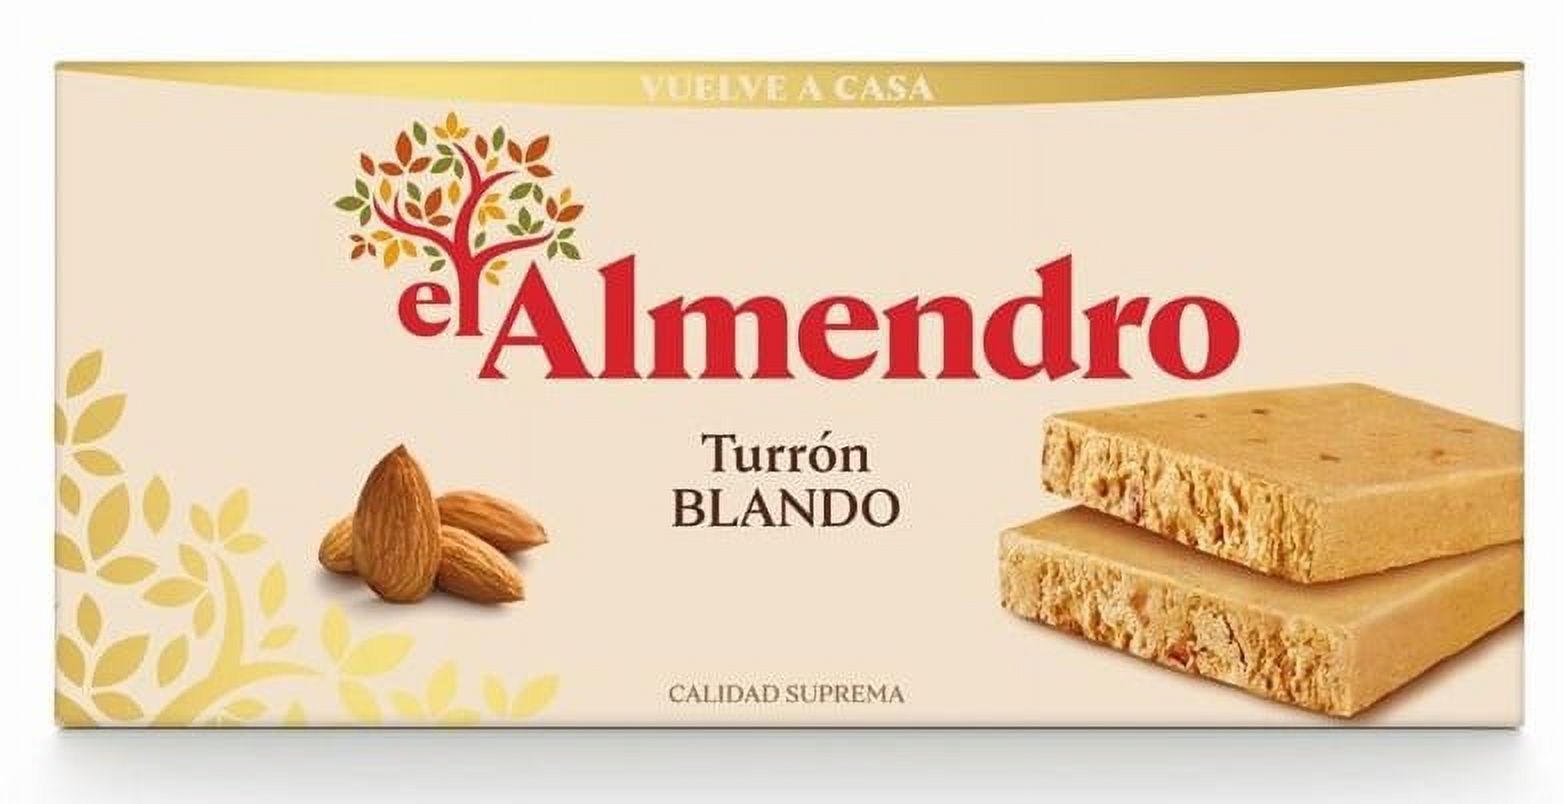 El Almendro Turron Blando Soft Spanish Turron Roasted Almonds and Honey 7.05oz. - image 1 of 2